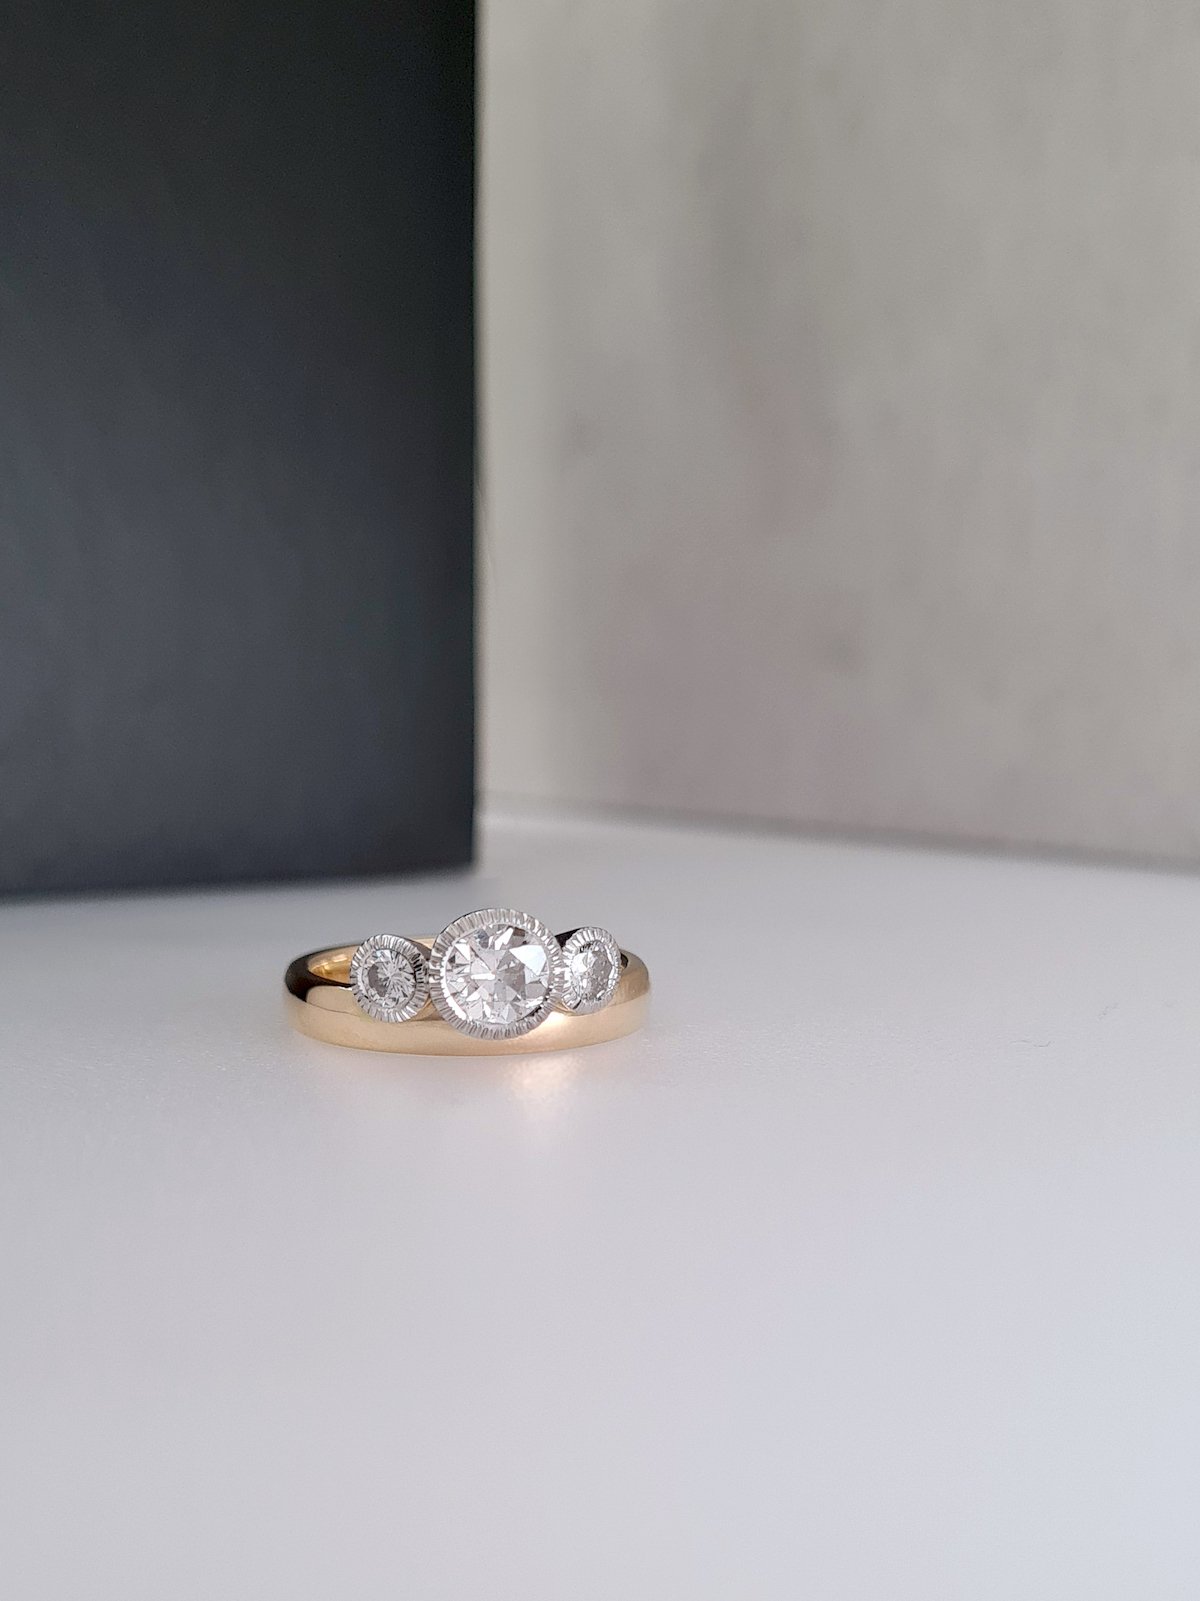 3_ Amanda-Li-Hope-three-stone-engagement-ring  ©Amanda Li Hope.jpg